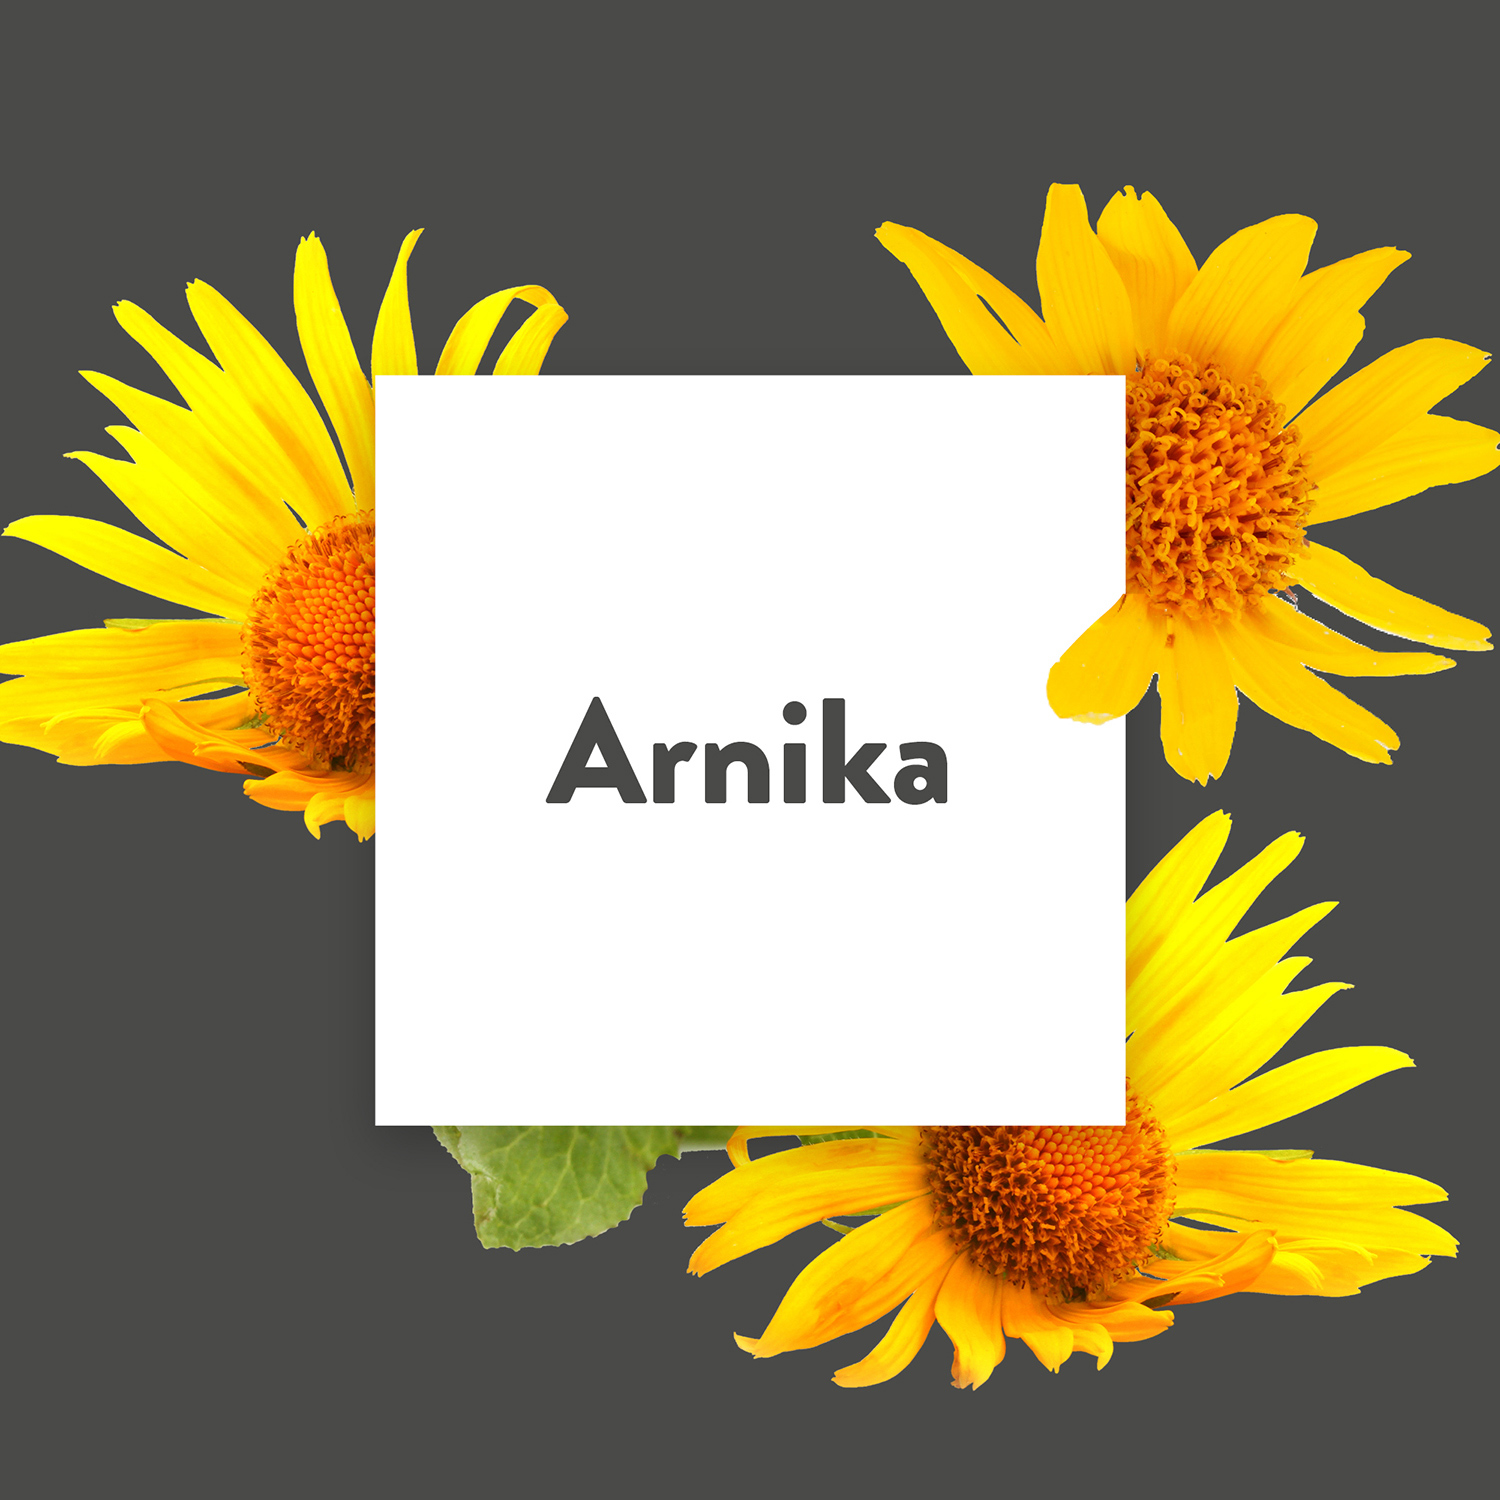 Pflanze des Monats Juni: Arnika